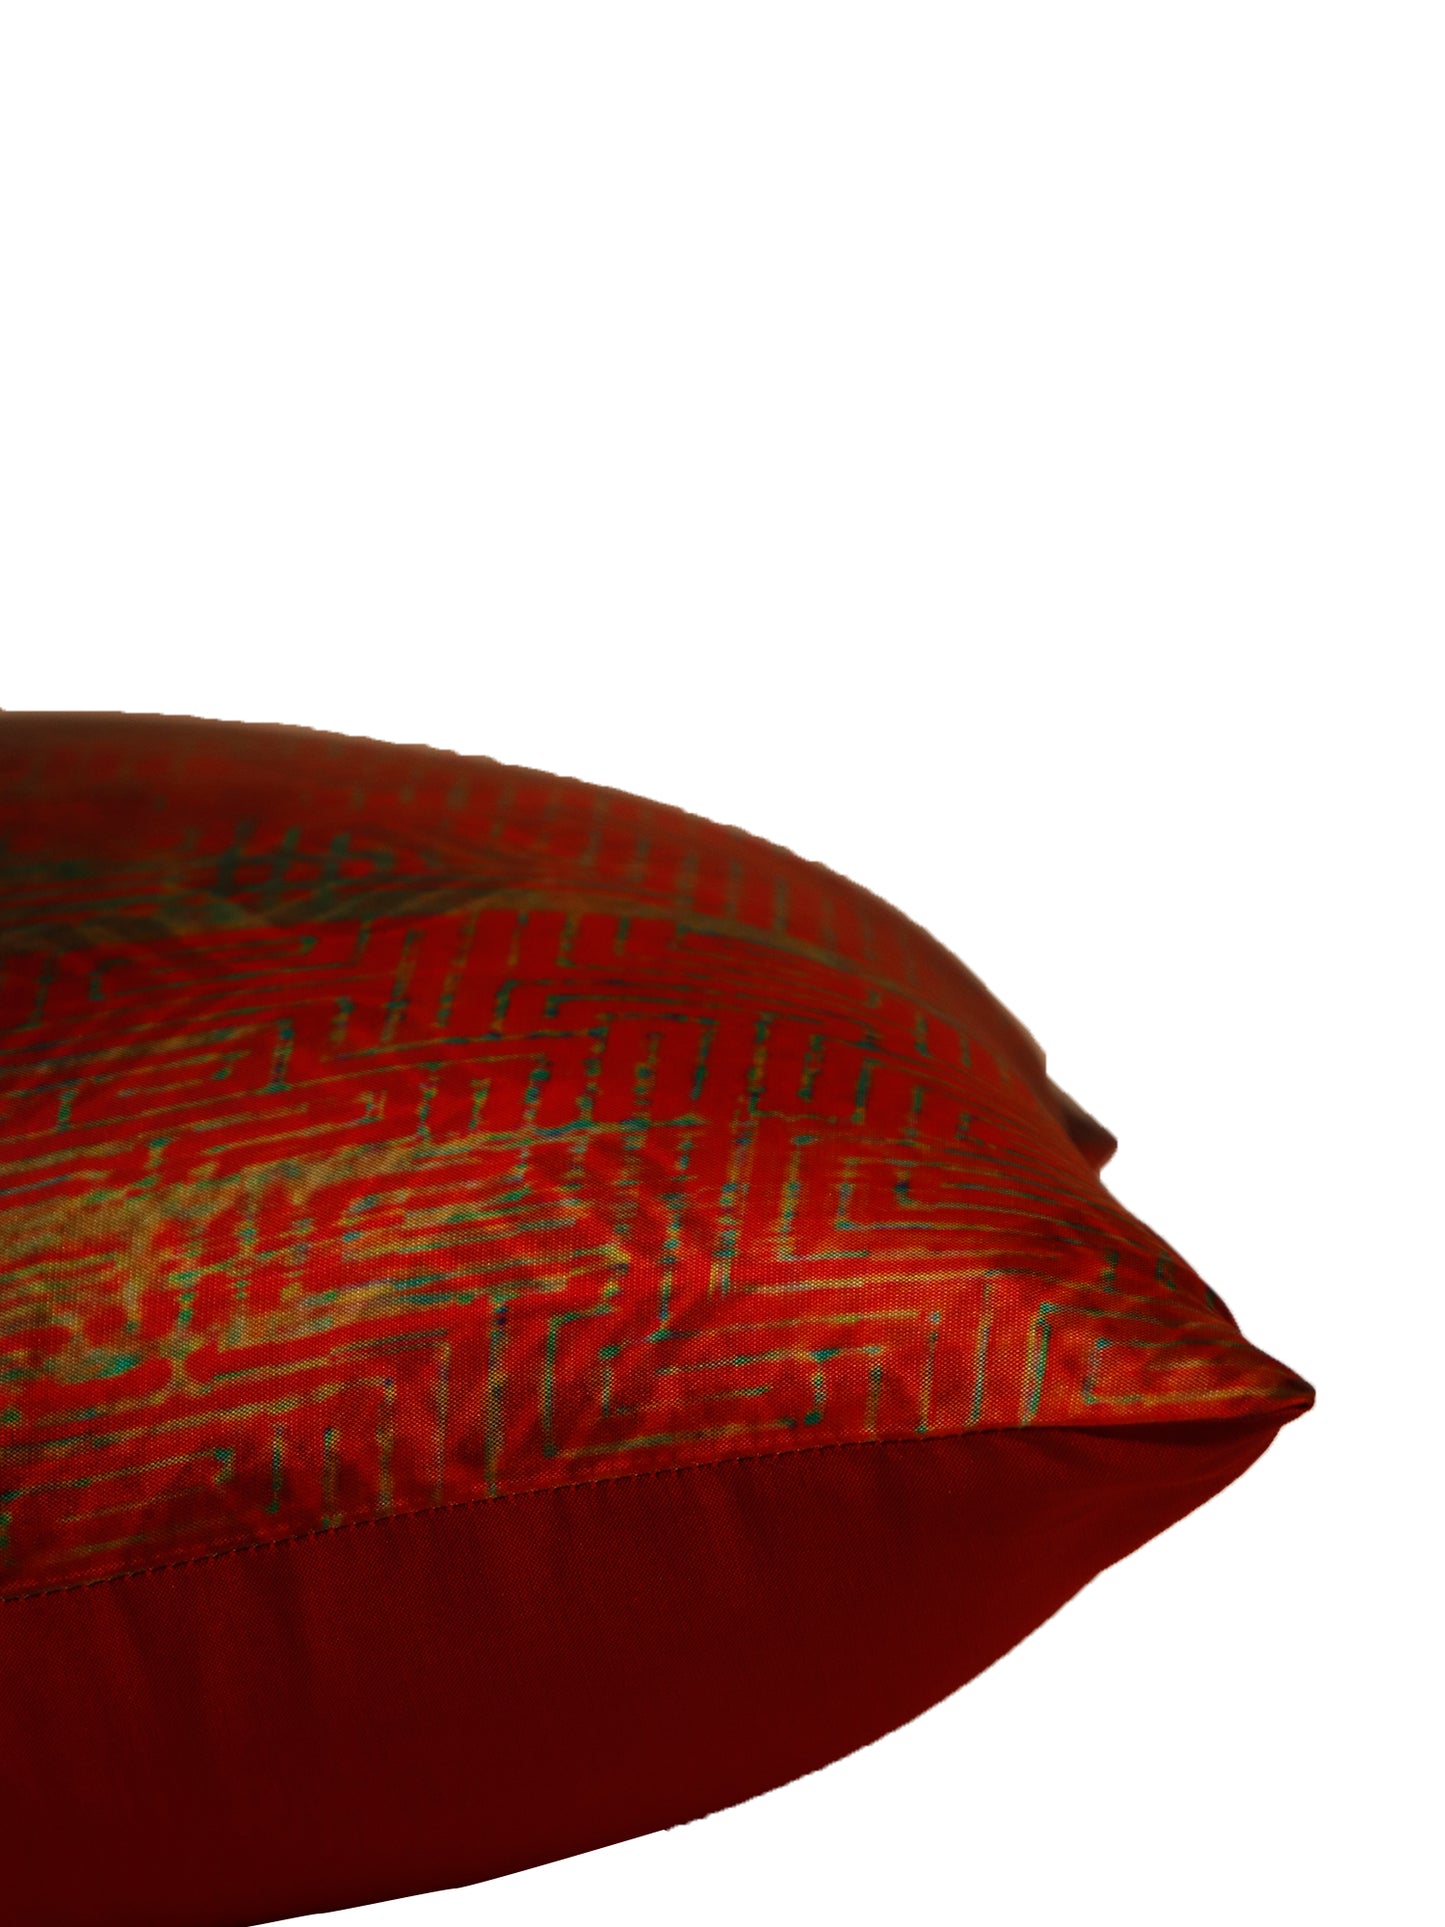 Cushion Cover Printed Taffeta Contemporary Print Red Orange - 16" X 16"